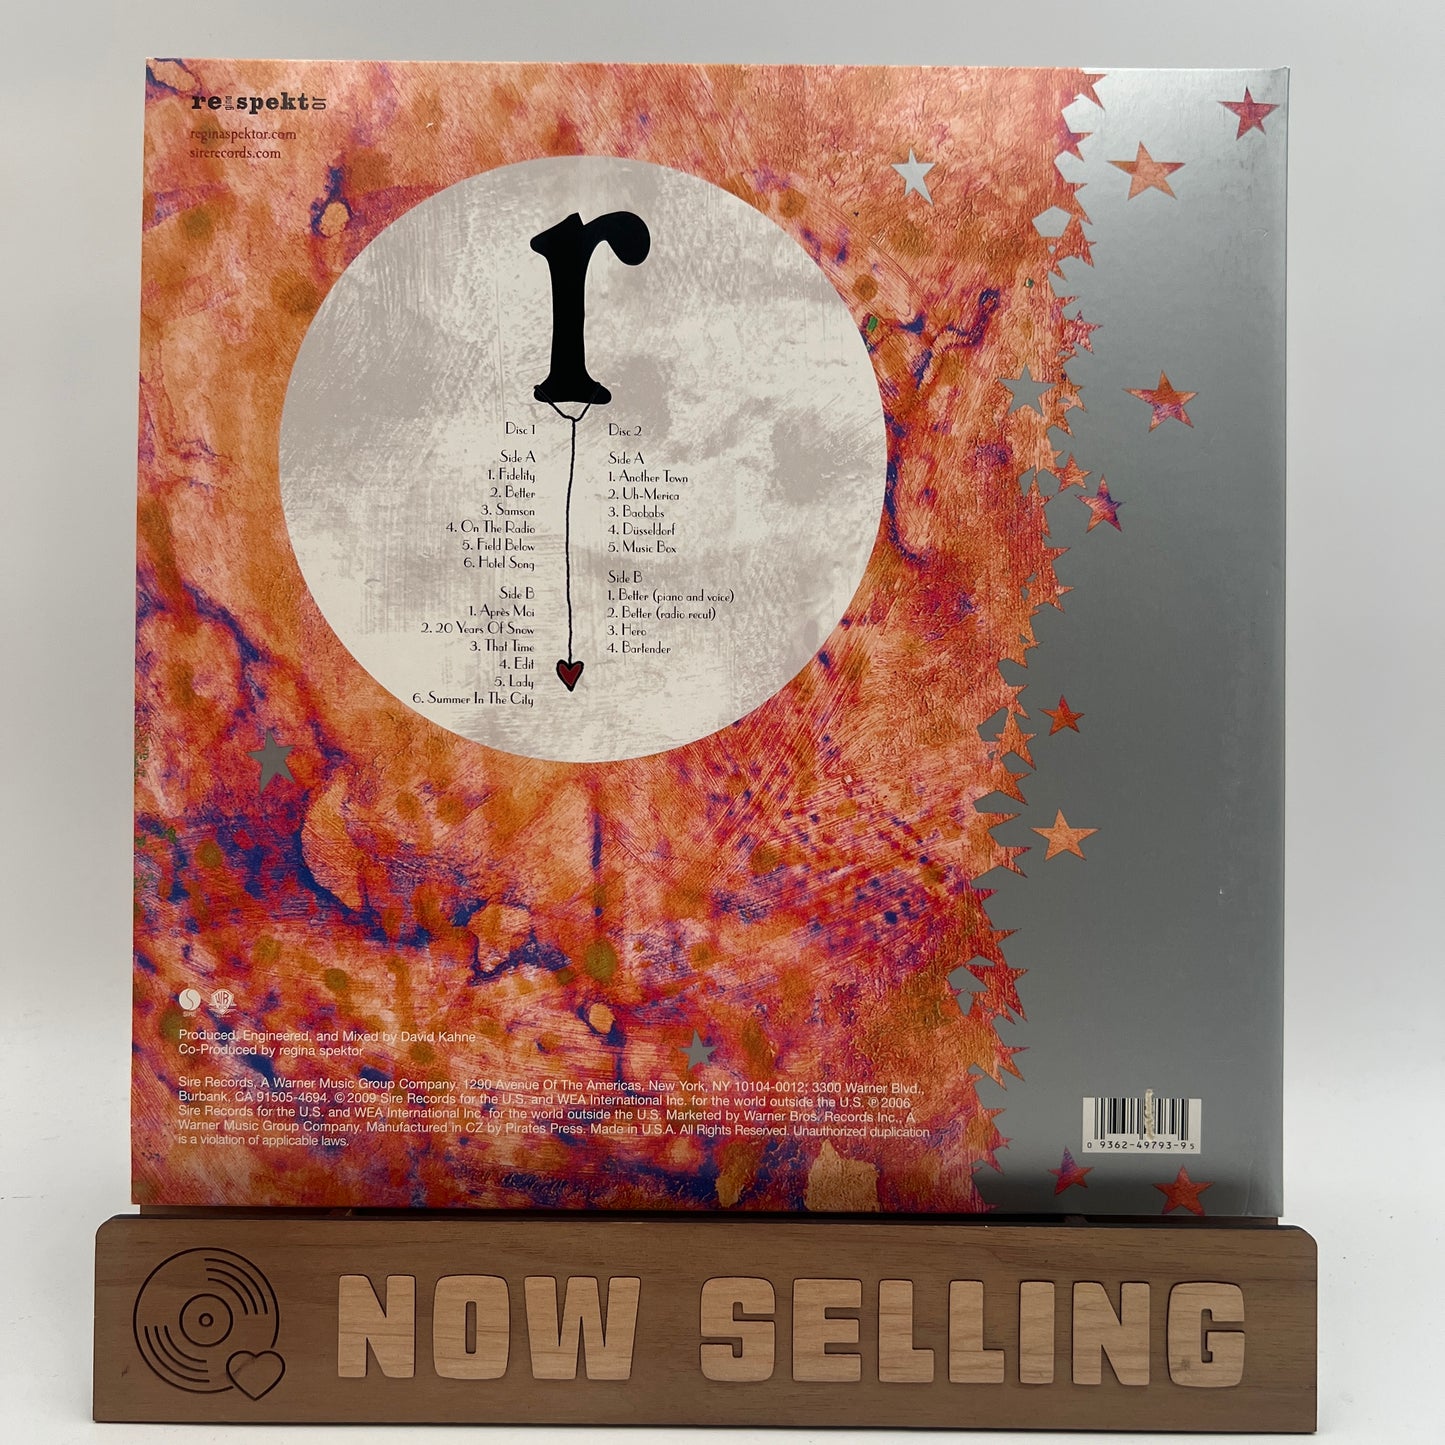 Regina Spektor - Begin To Hope Vinyl LP Original 1st Press